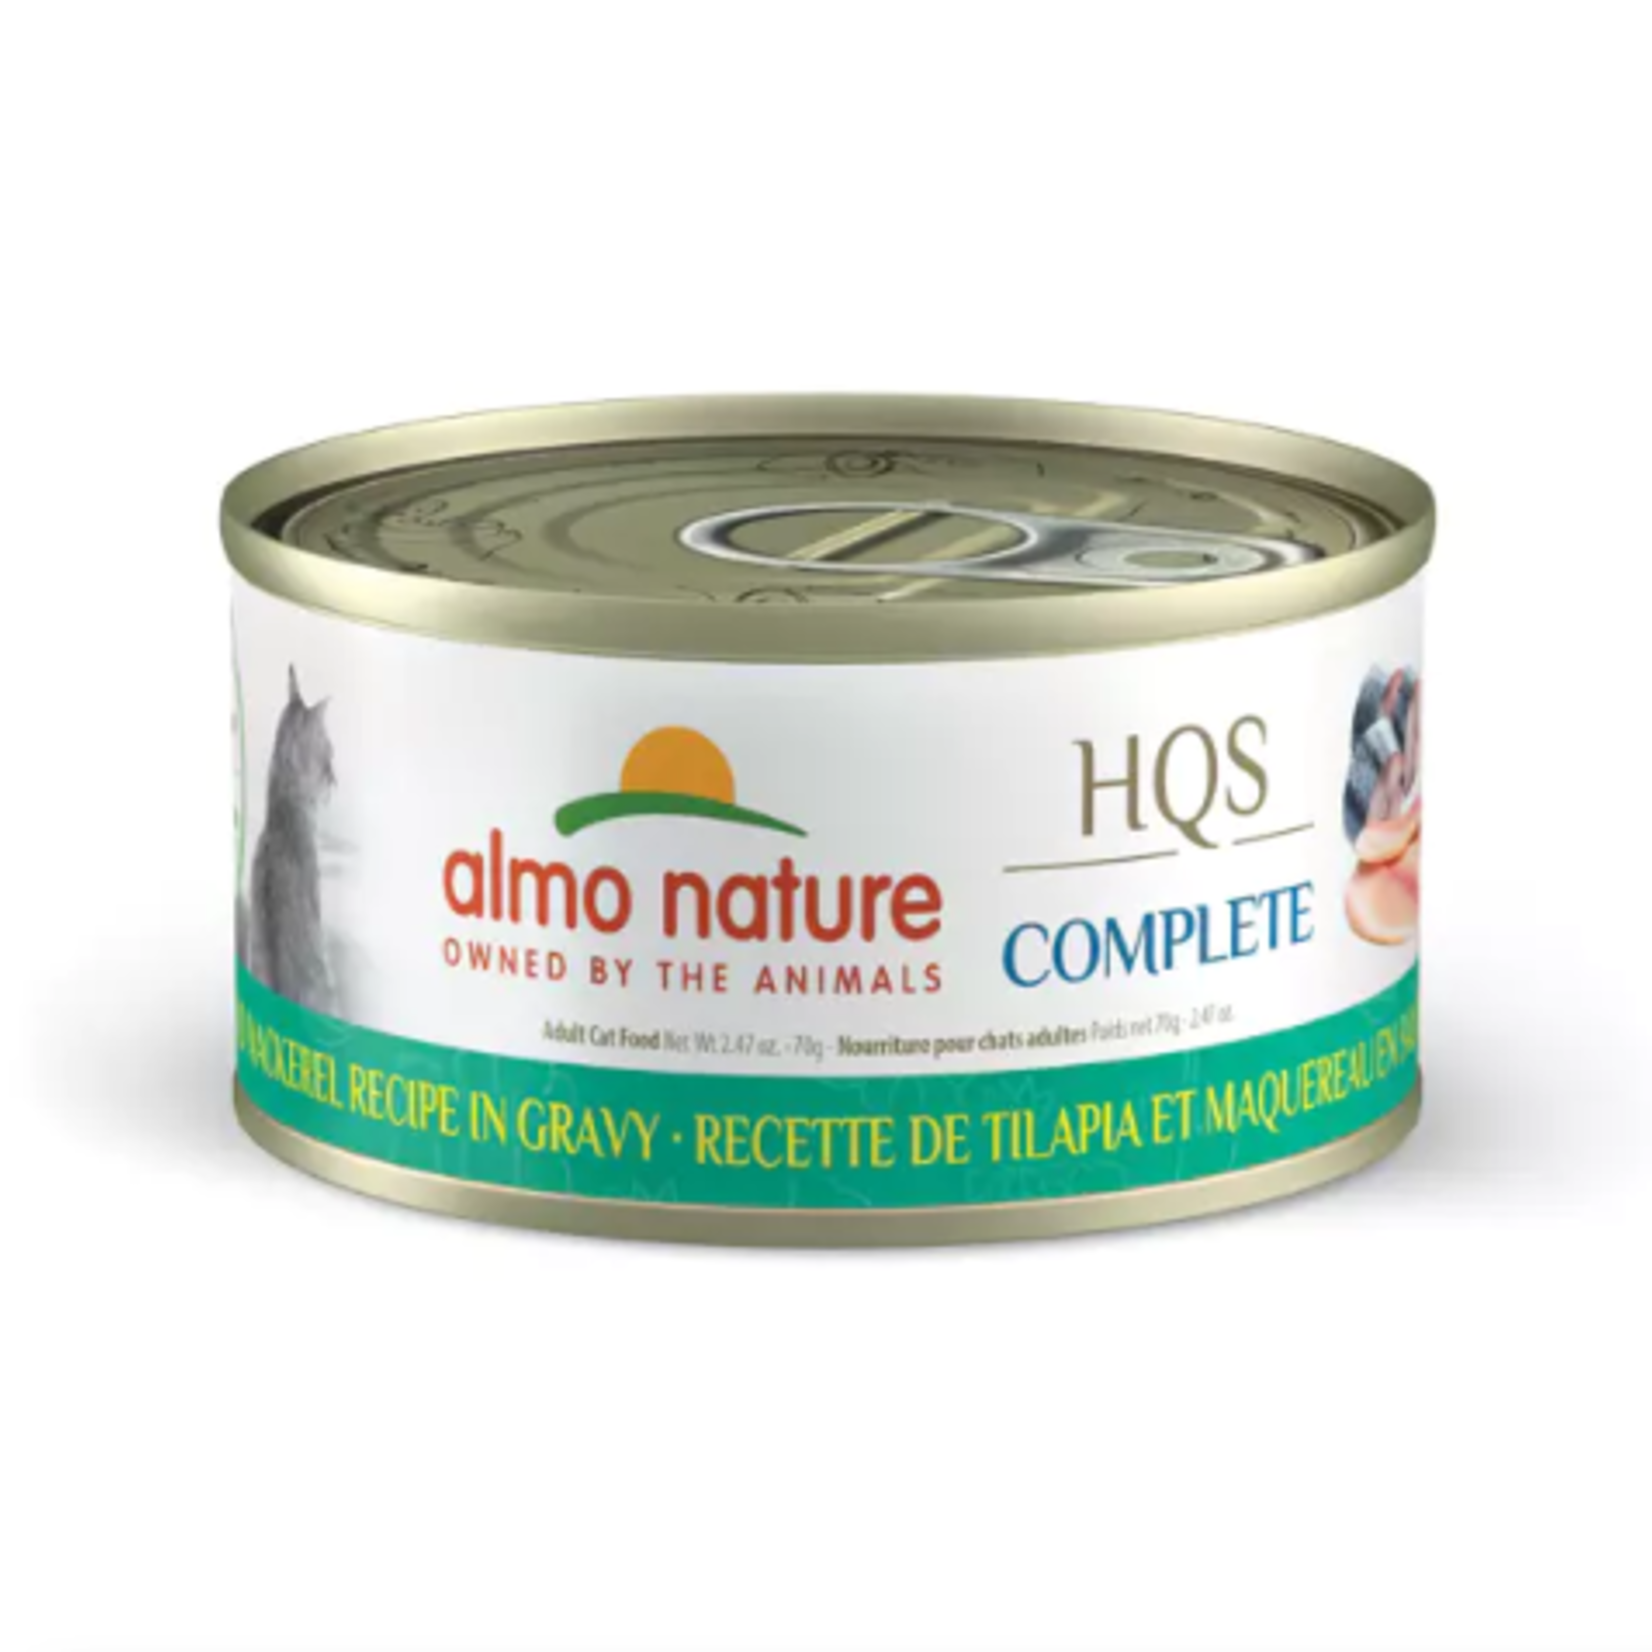 Almo HQS Complete - Tilapia and Mackerel Recipe in Gravy - 70 g